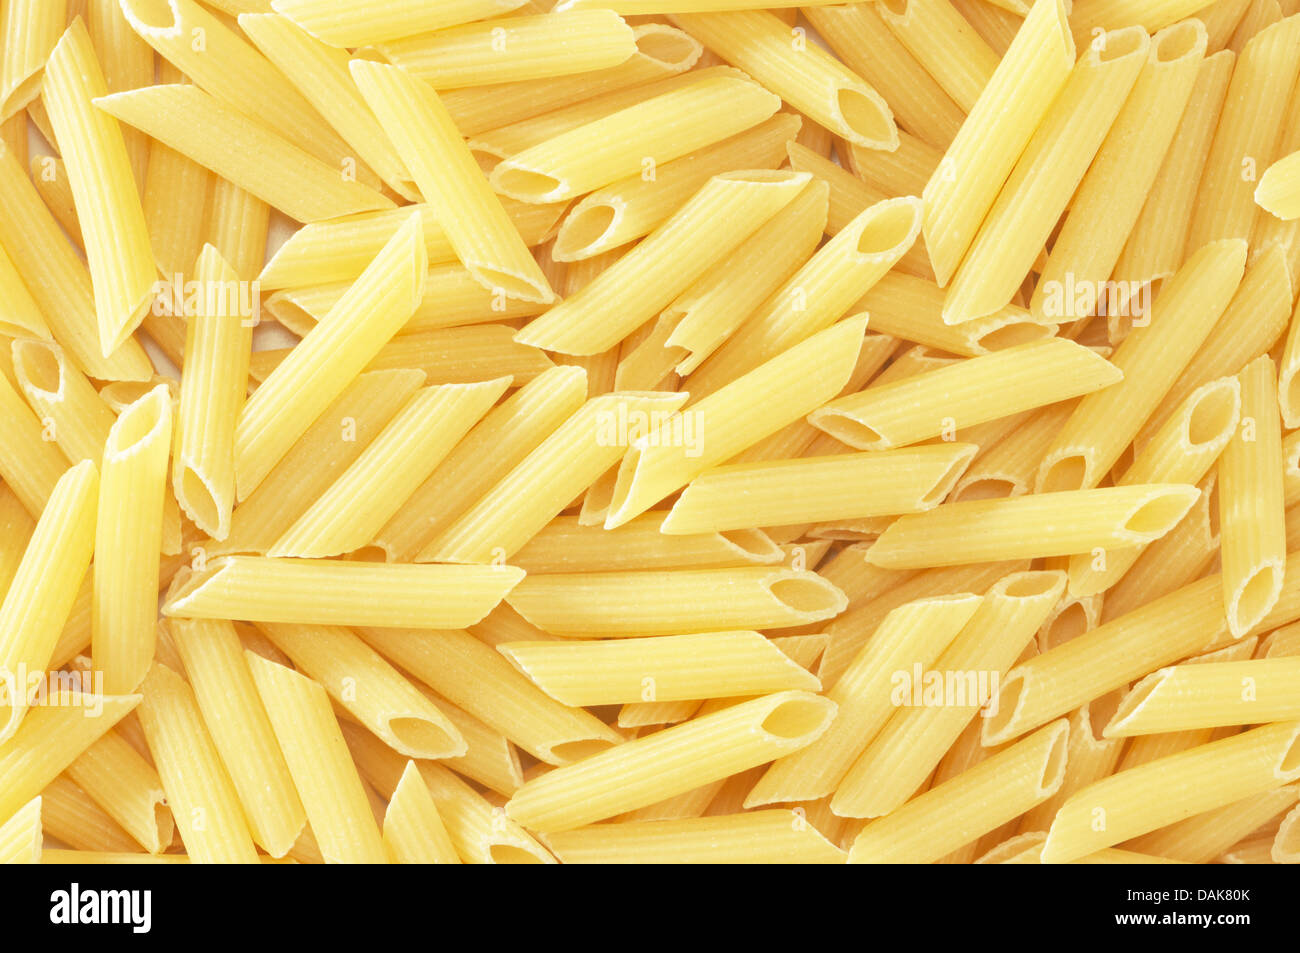 background with closeup of macaroni pasta Stock Photo